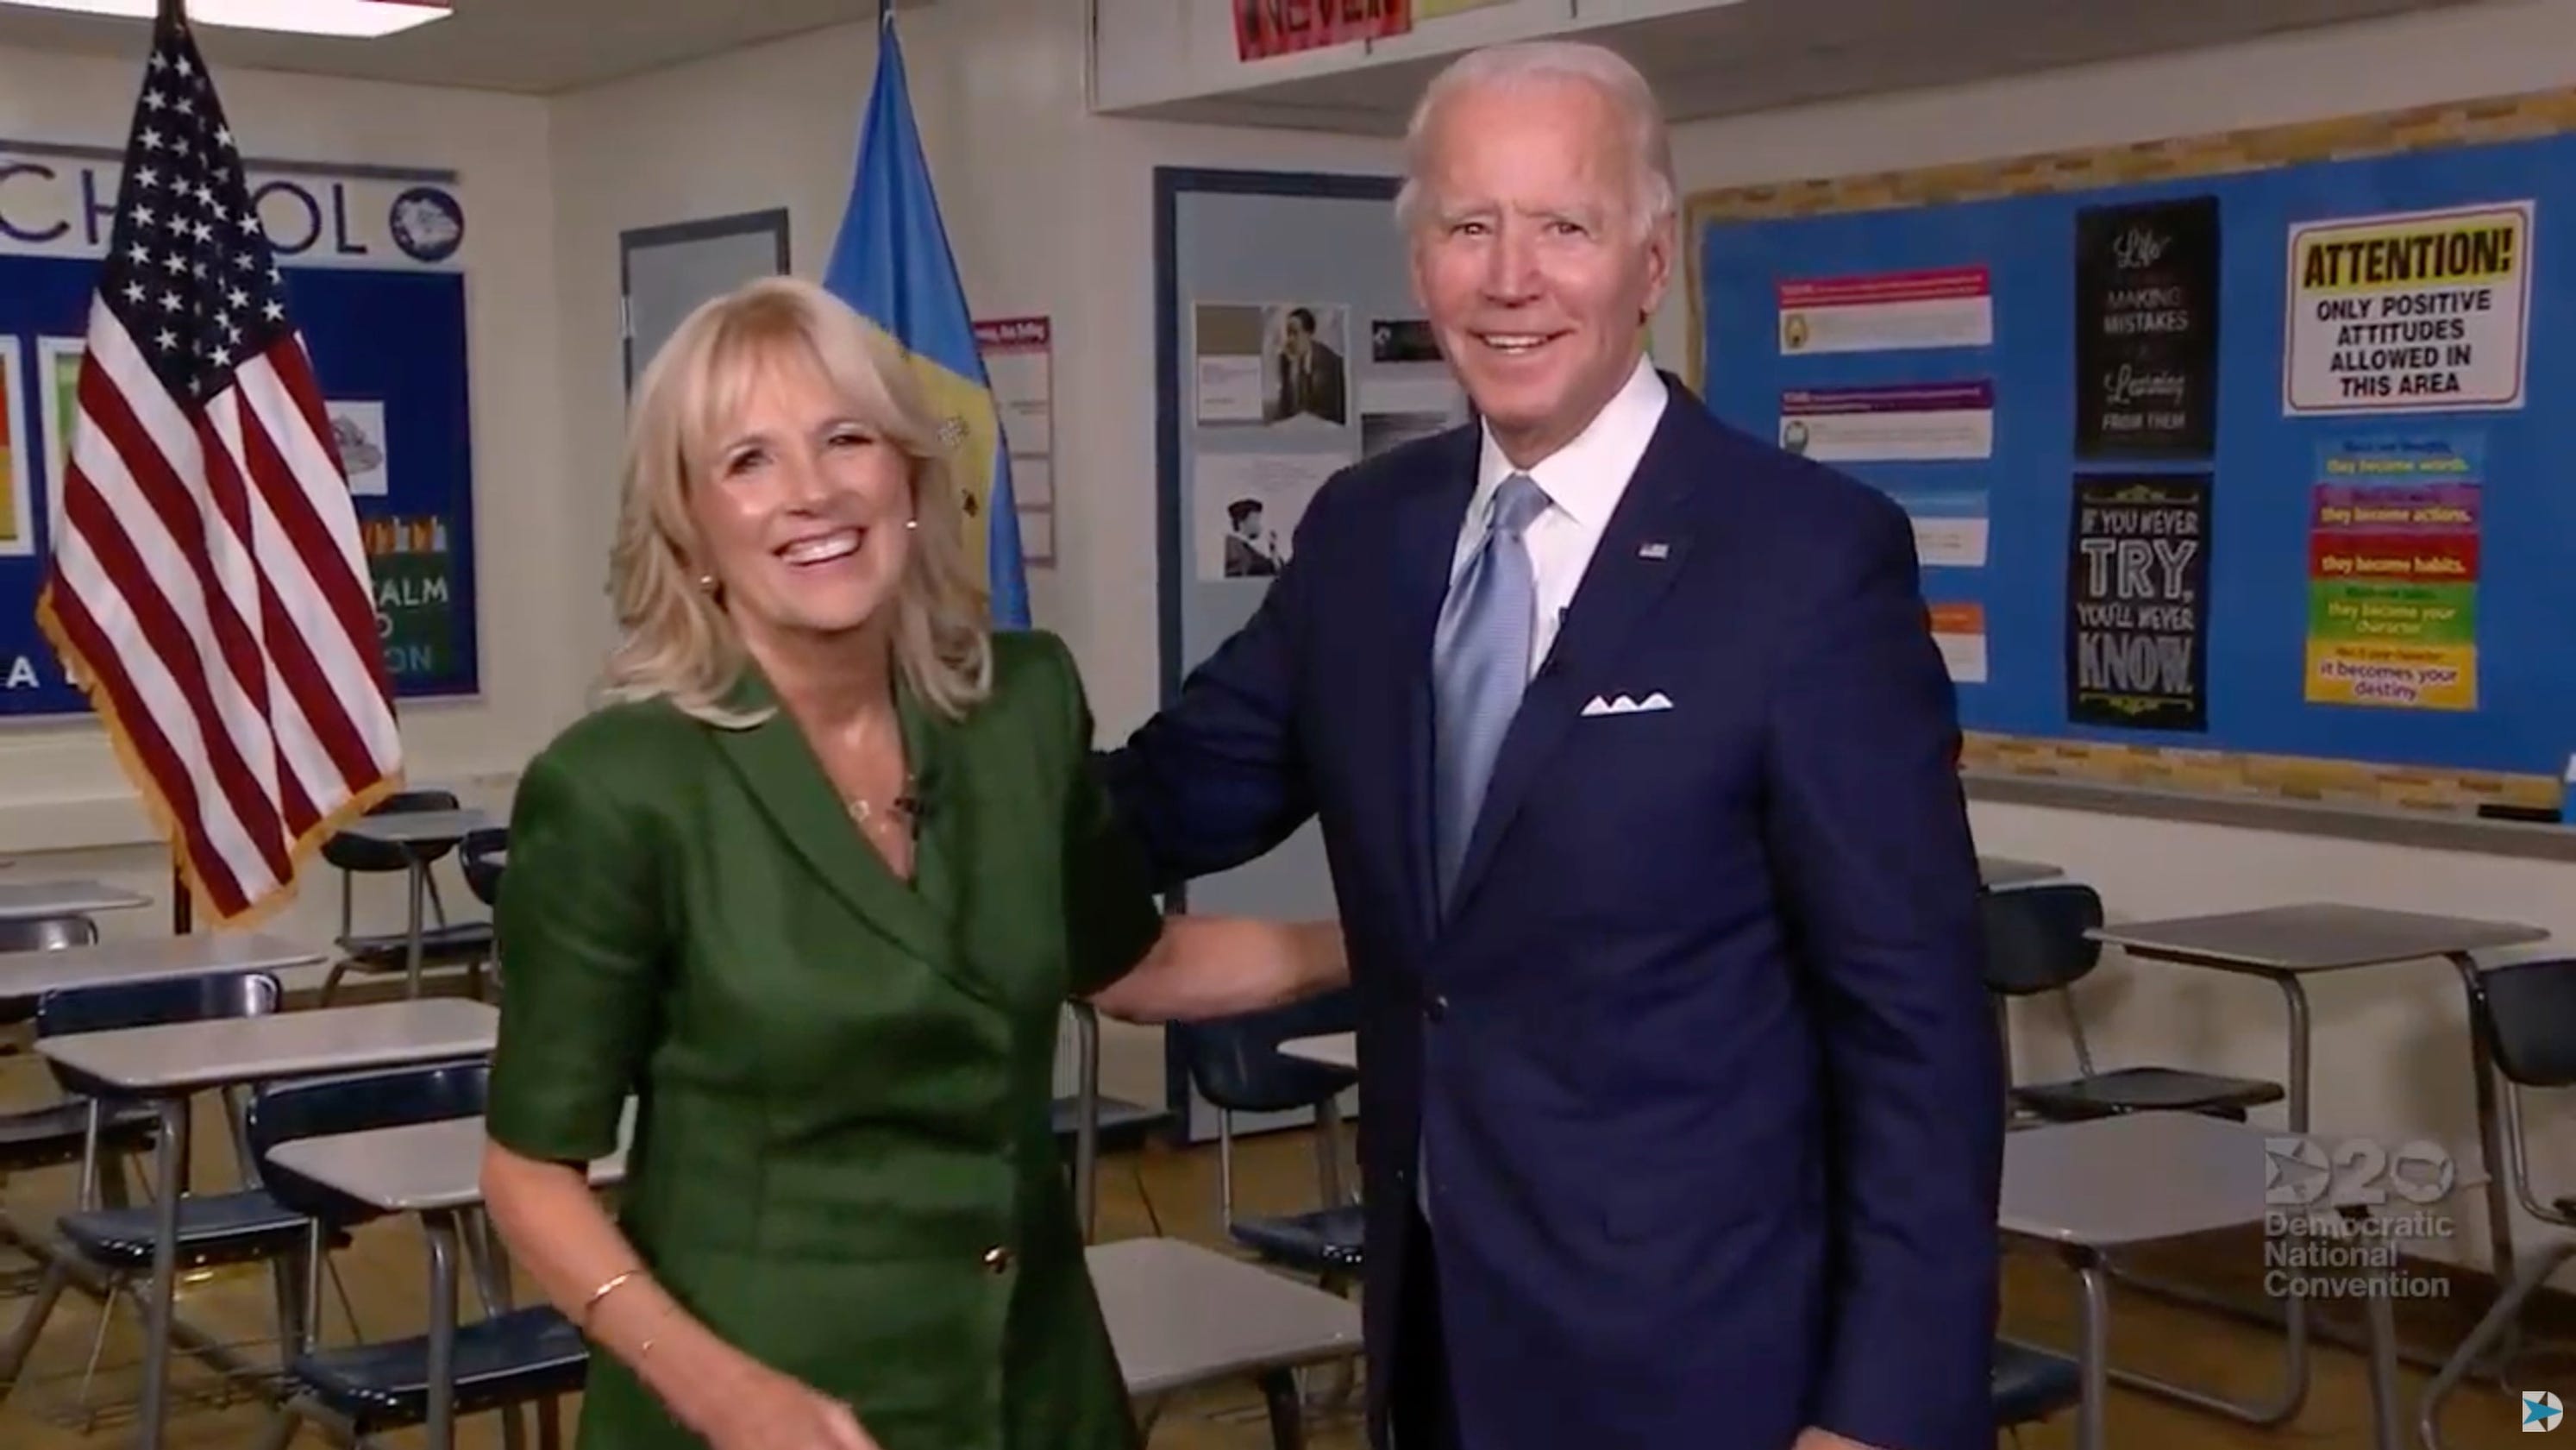 DNC top moments: Jill Biden shares intimate portrayal of Joe Biden, Bill Clinton hits Trump